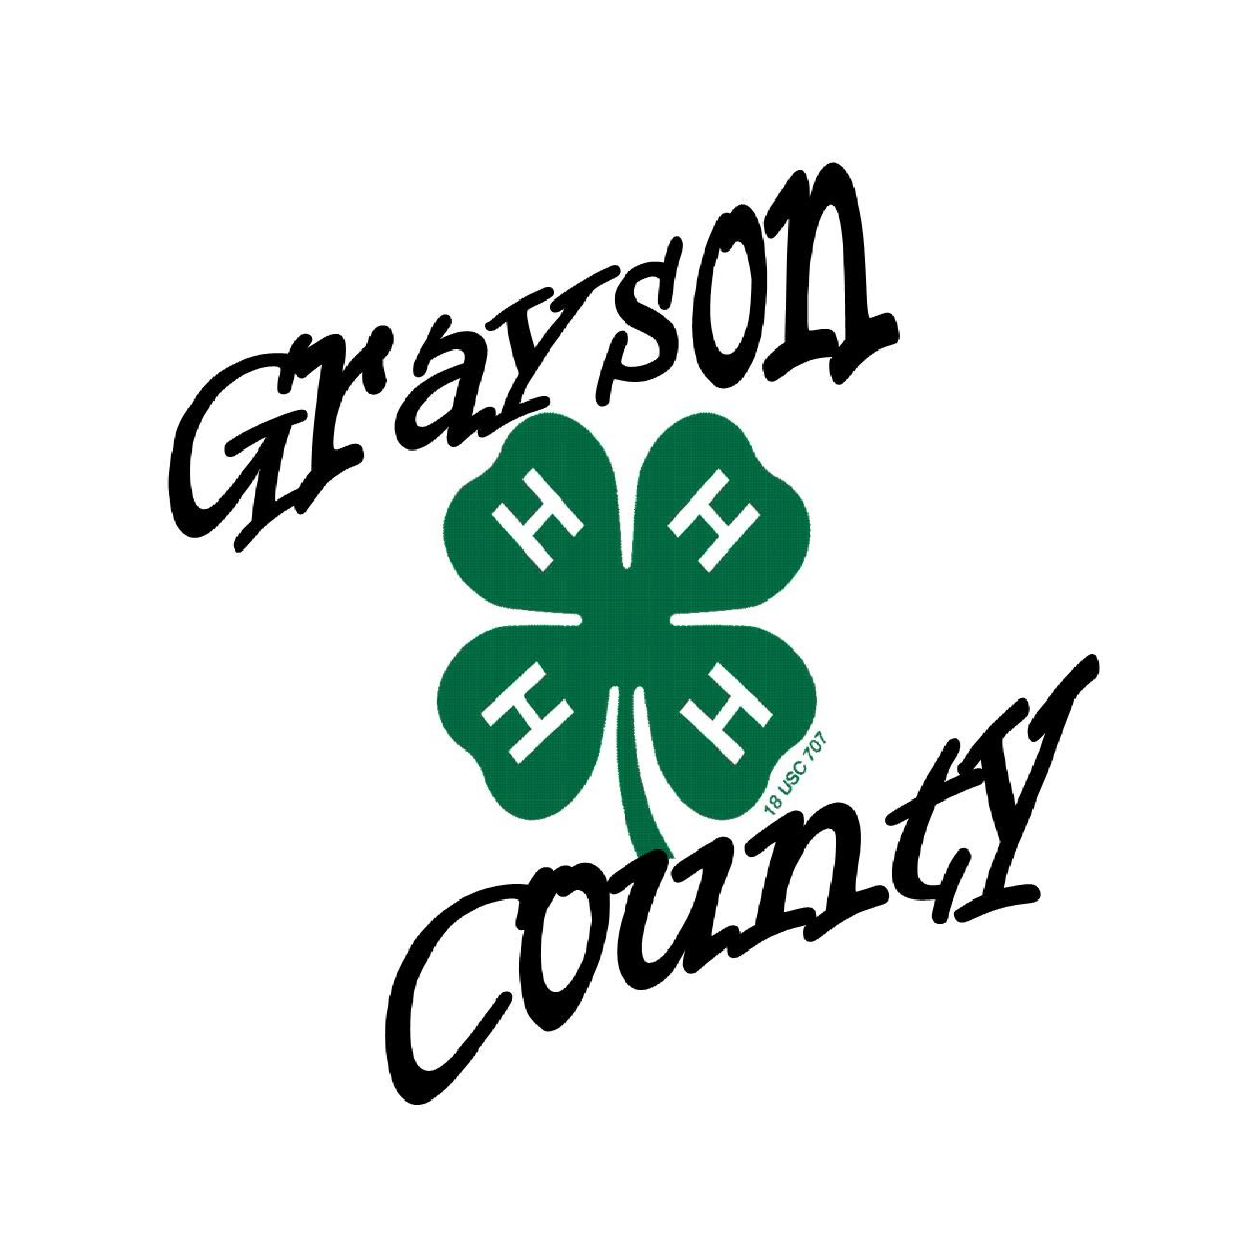 Grayson county 4-h